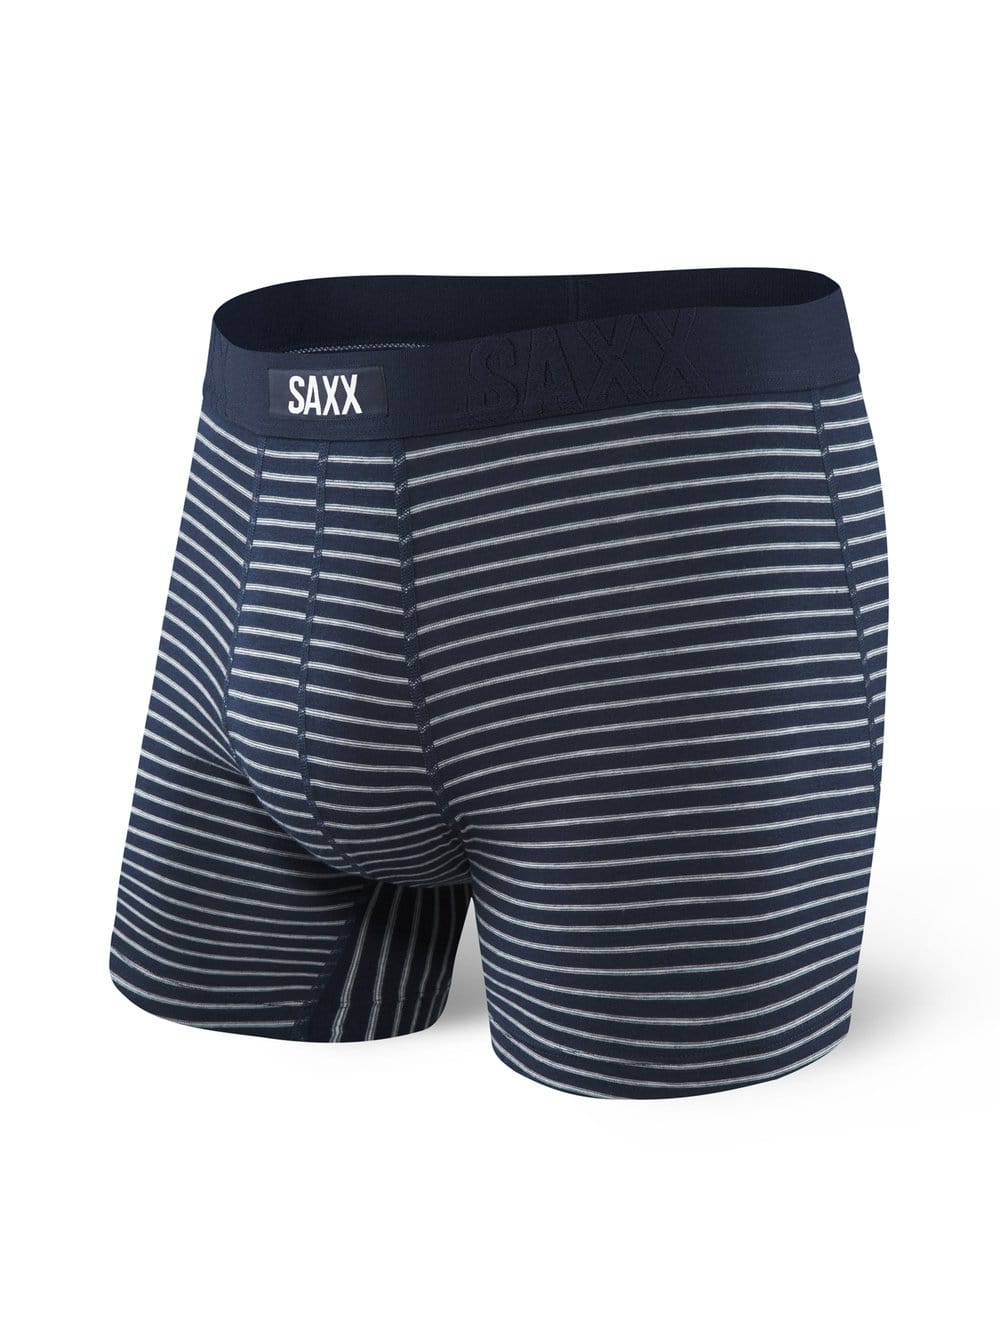 Saxx Undercover Boxer Brief SXBB19X-Navy Skipper Stripe-NSS